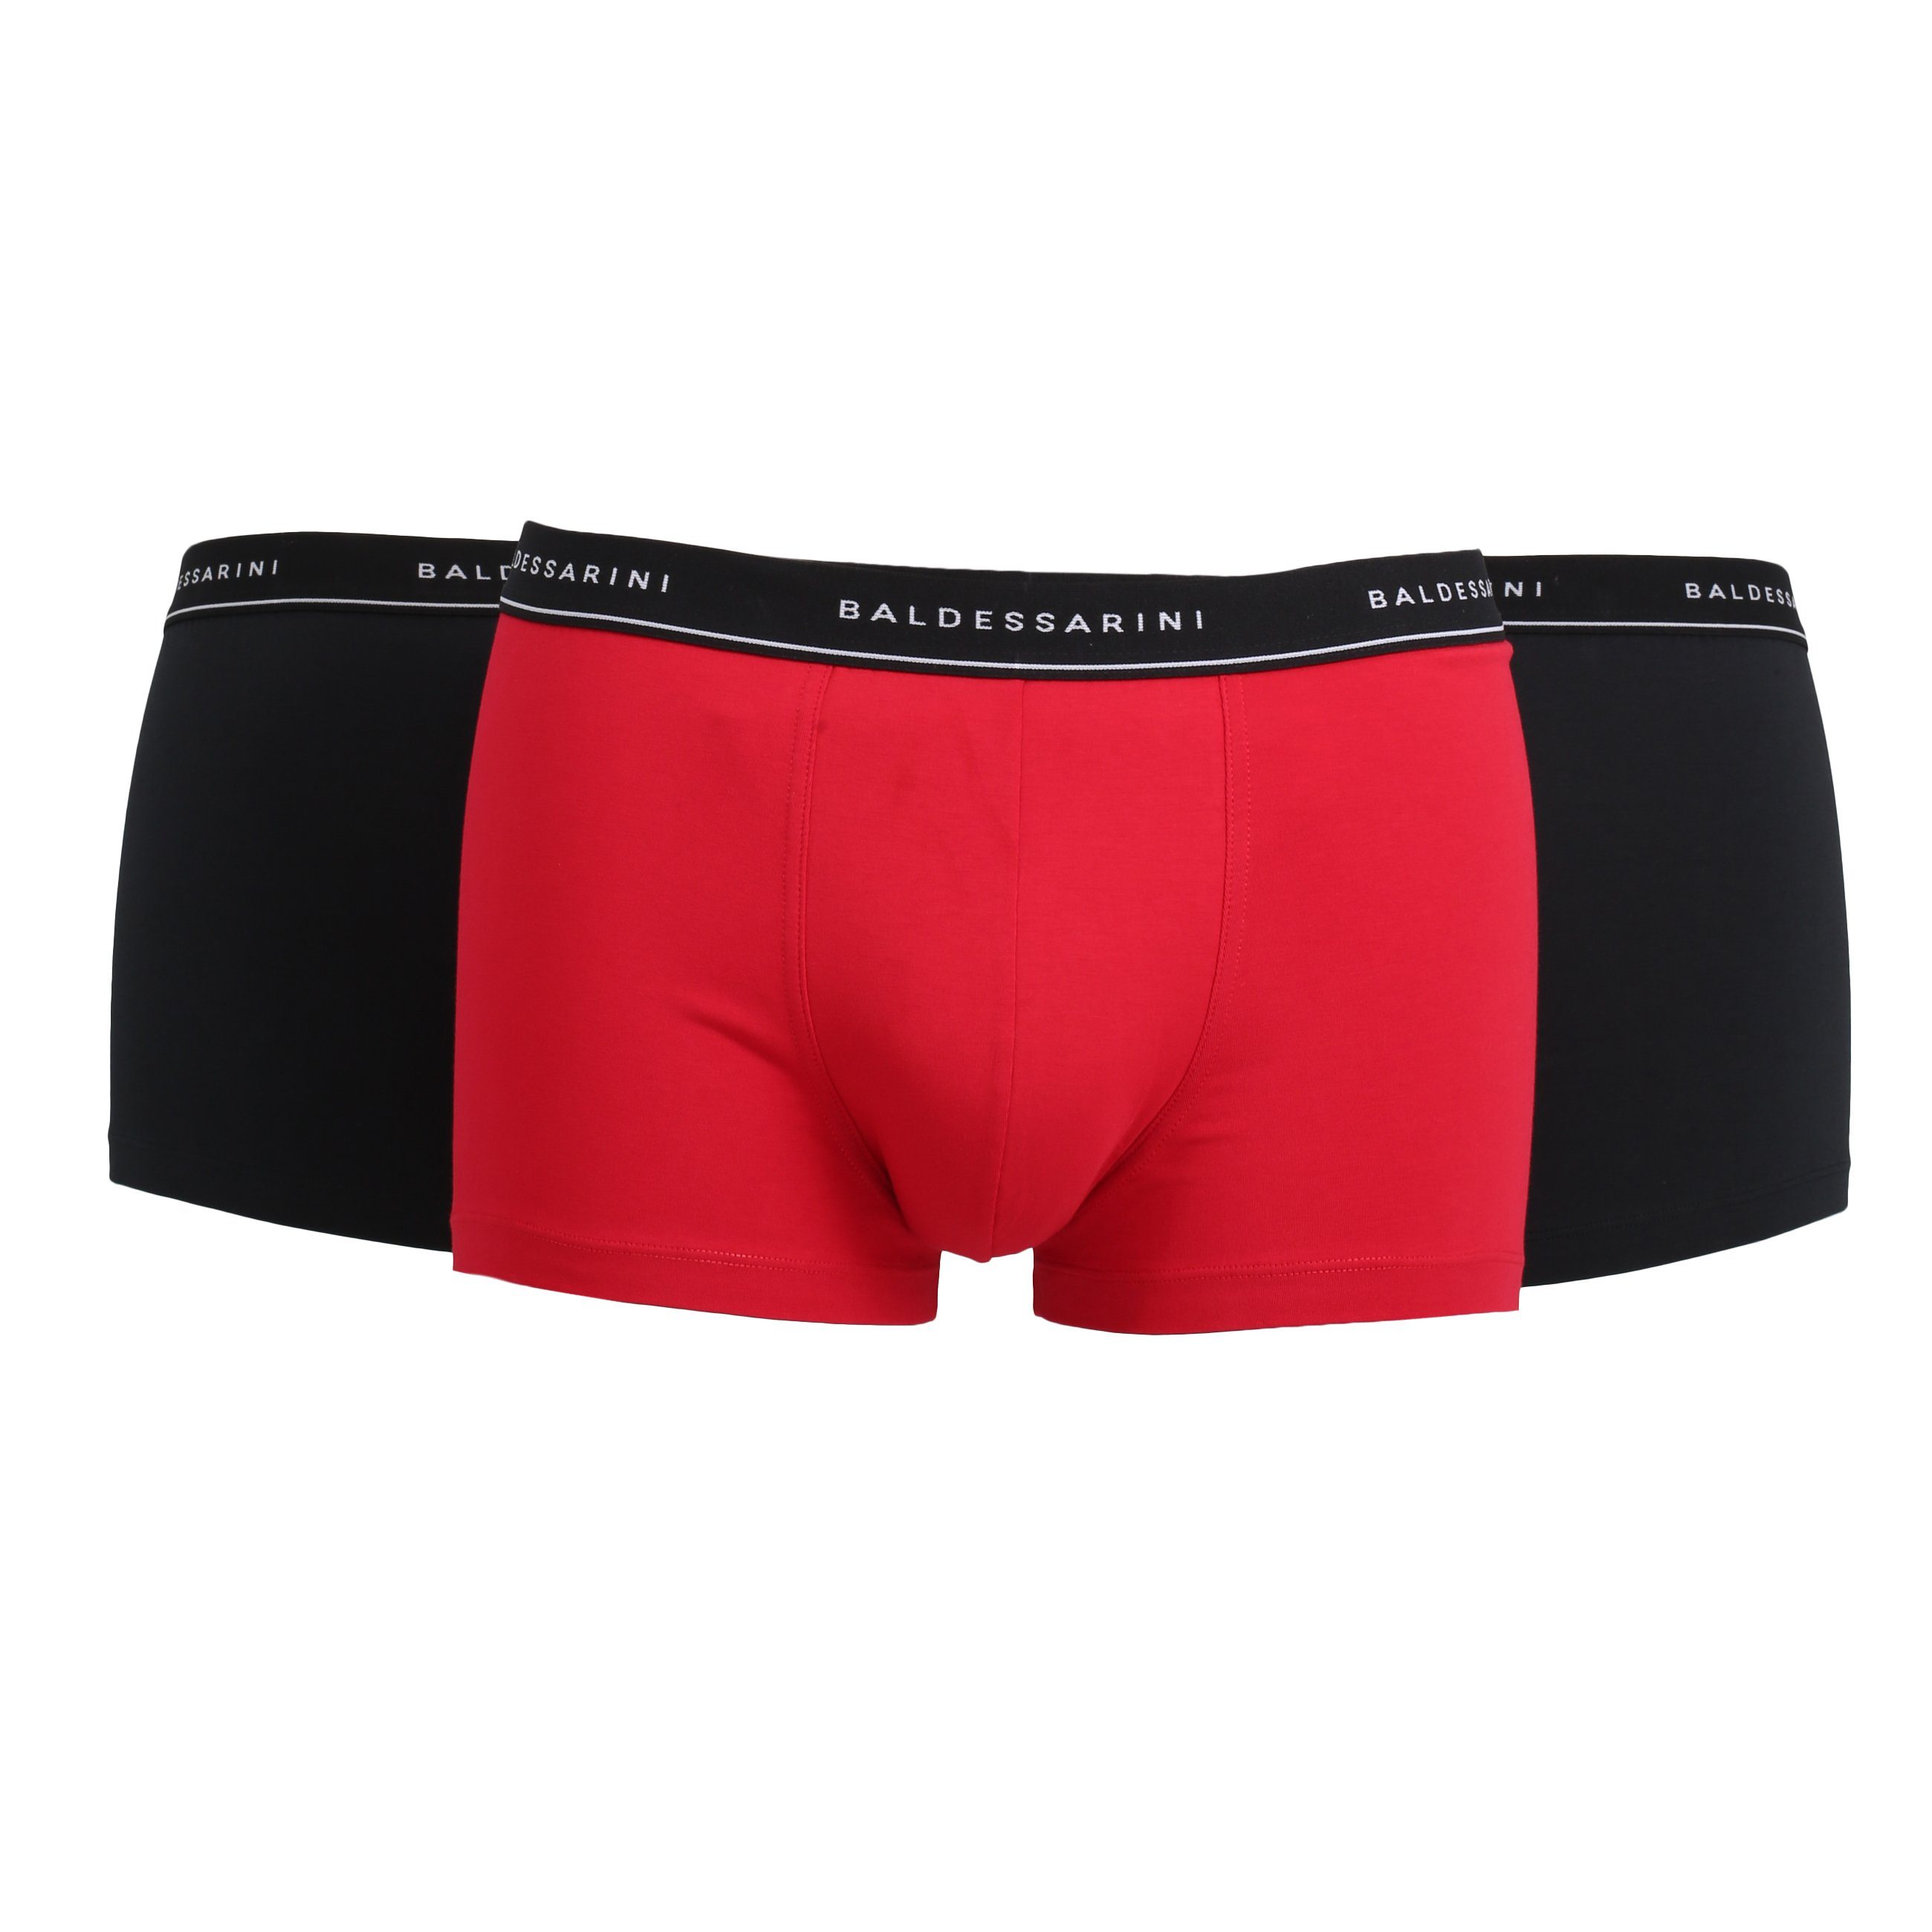 BALDESSARINI Boxer Herren Shorts 3er Pack - Pants, Stretch Cotton Rot/Schwarz